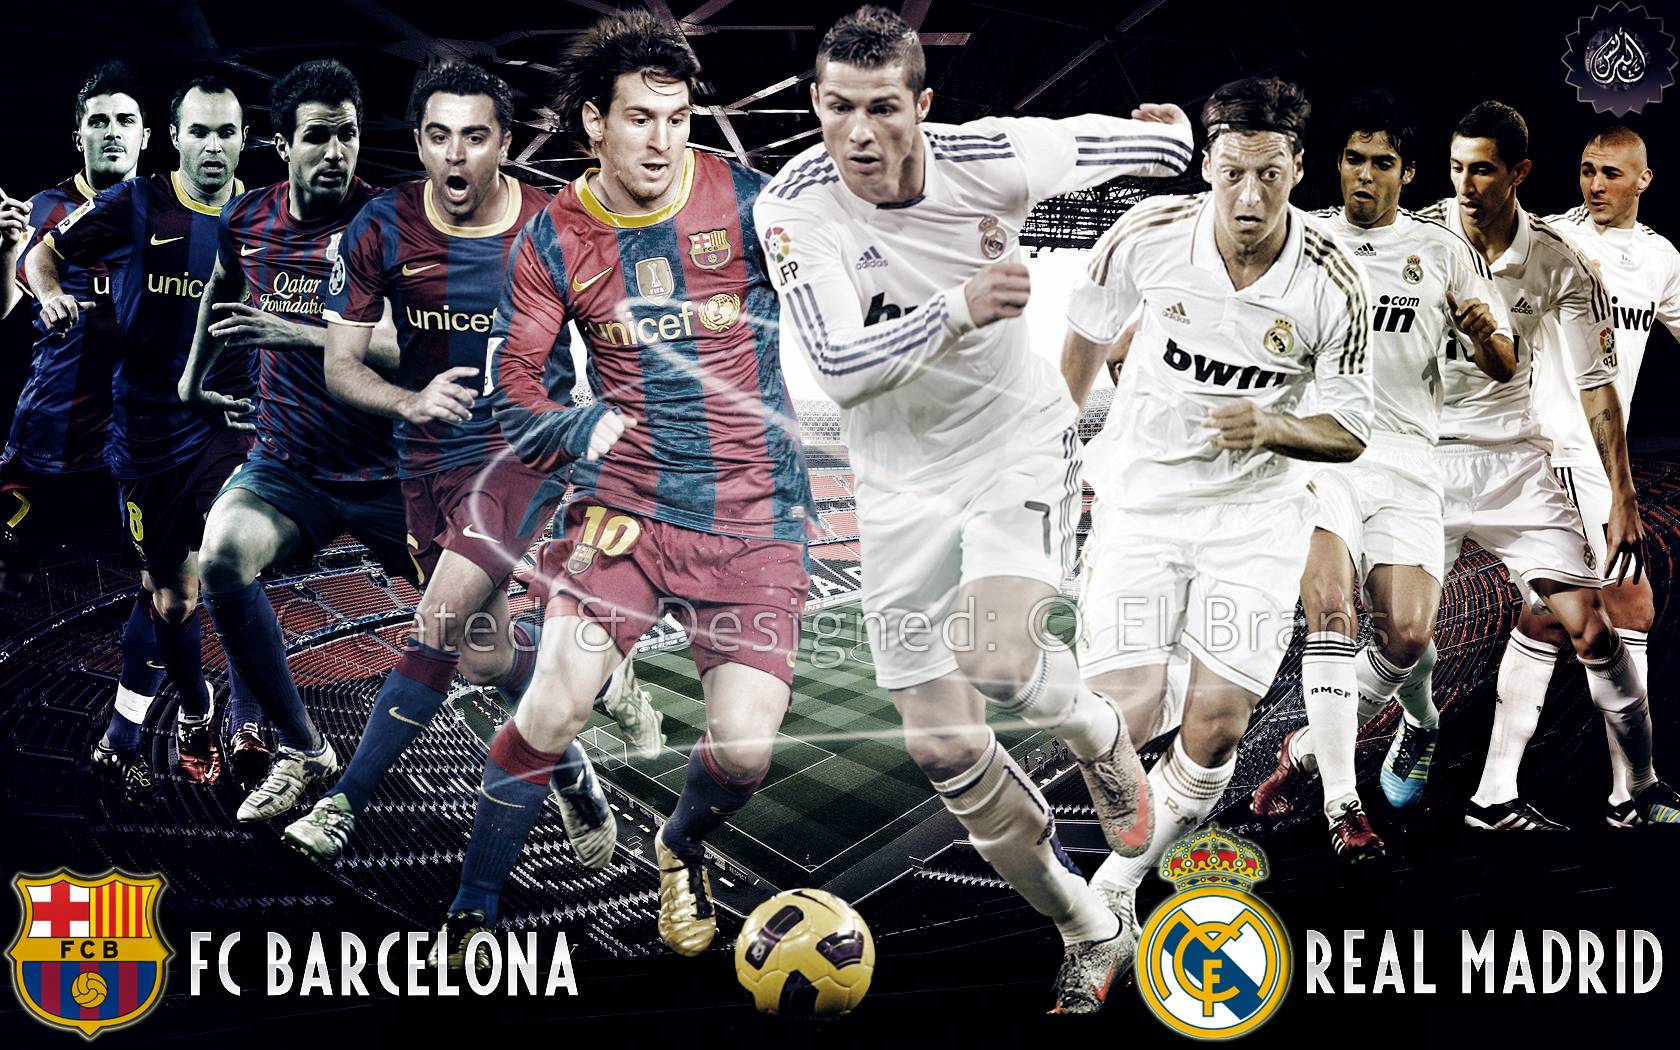 Real Madrid Vs Barcelona Wallpapers - Wallpaper Cave1680 x 1050